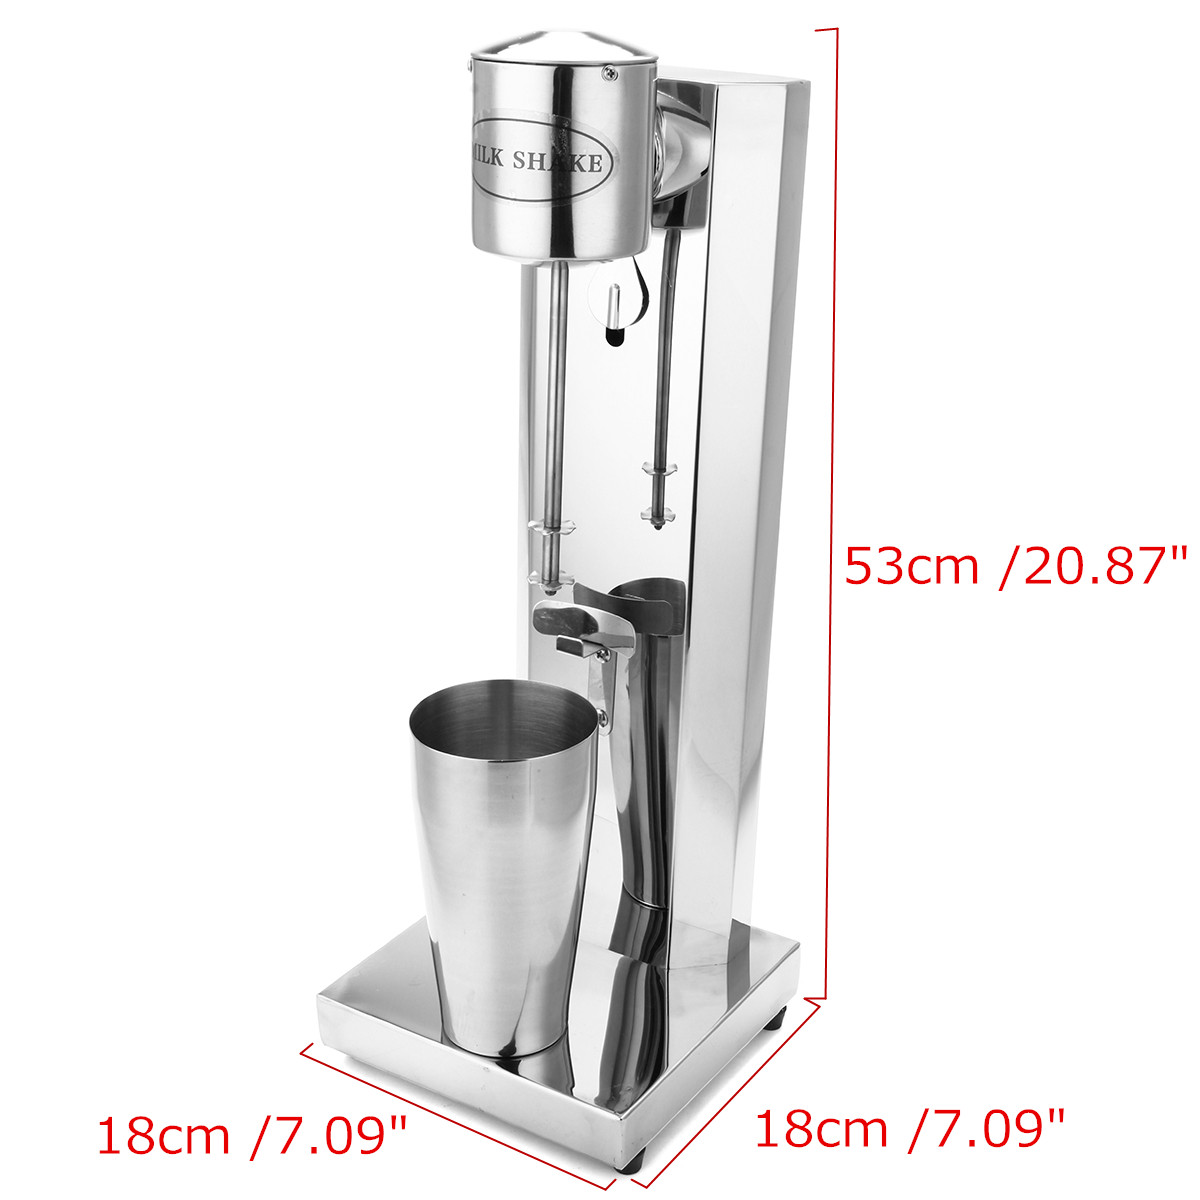 Electric Stainless Steel Milkshake Maker Machine Smoothie Cup Set Cocktail Shaker 21